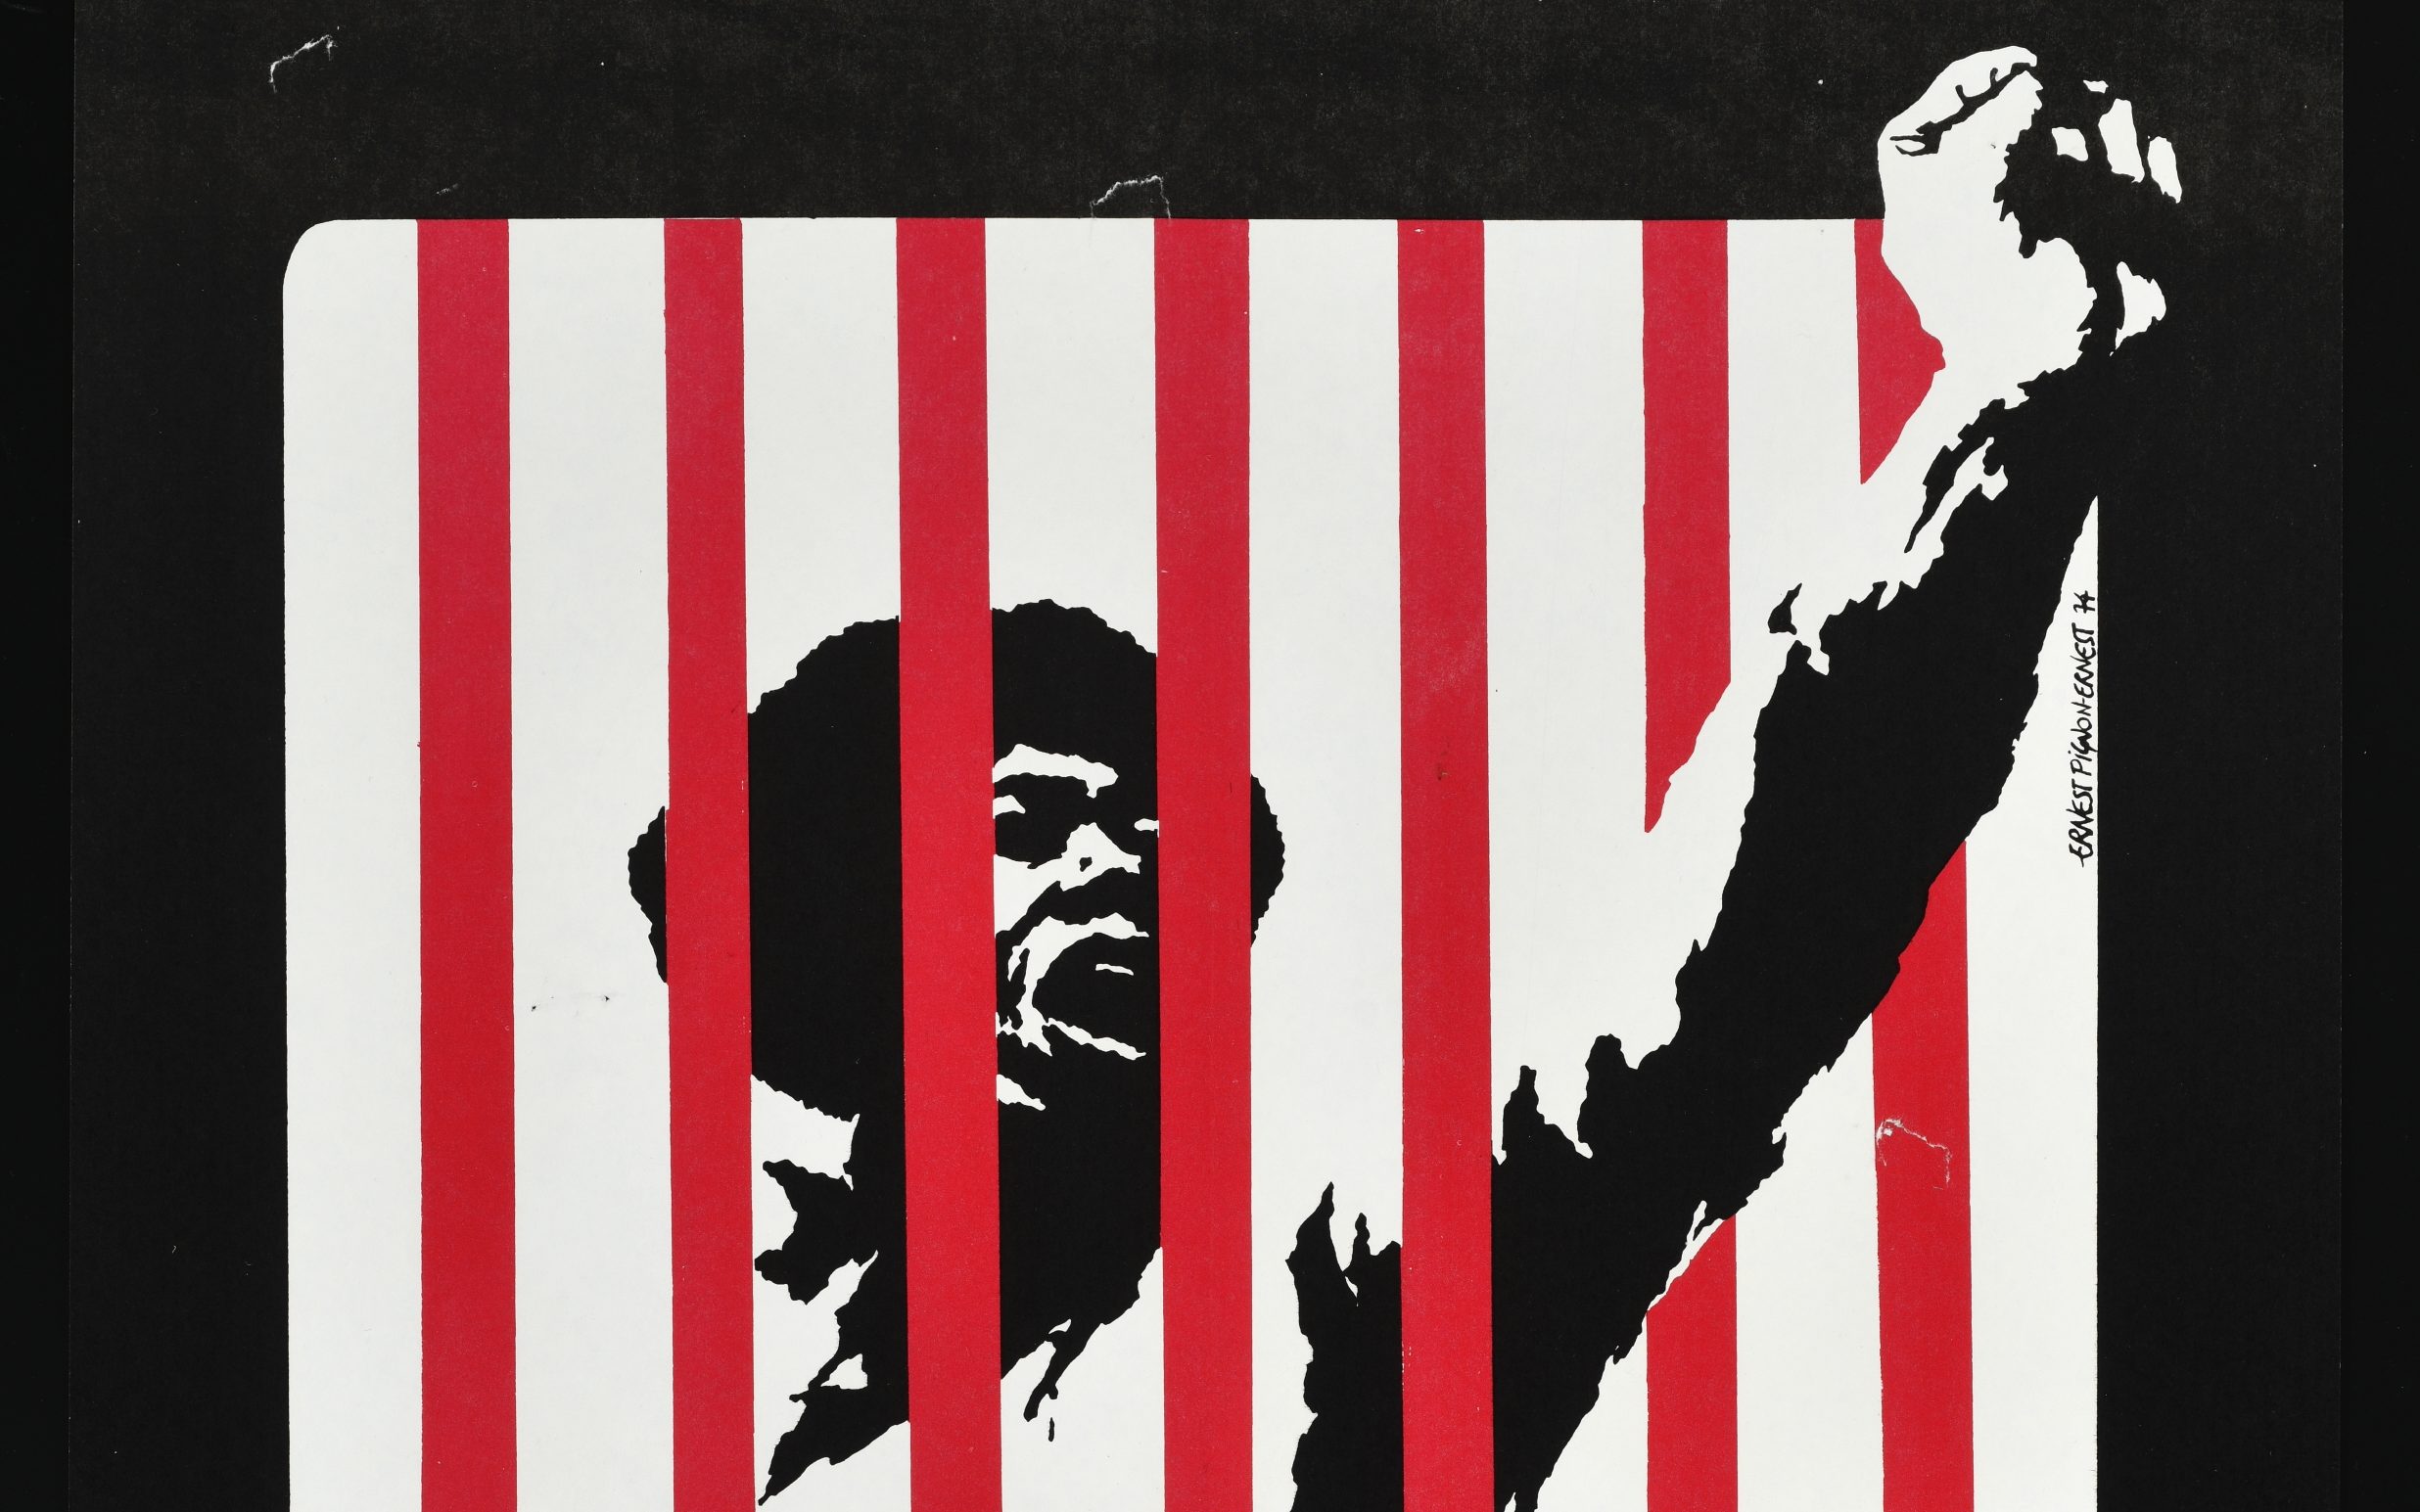 Poster of a man behind bars raising his fist.